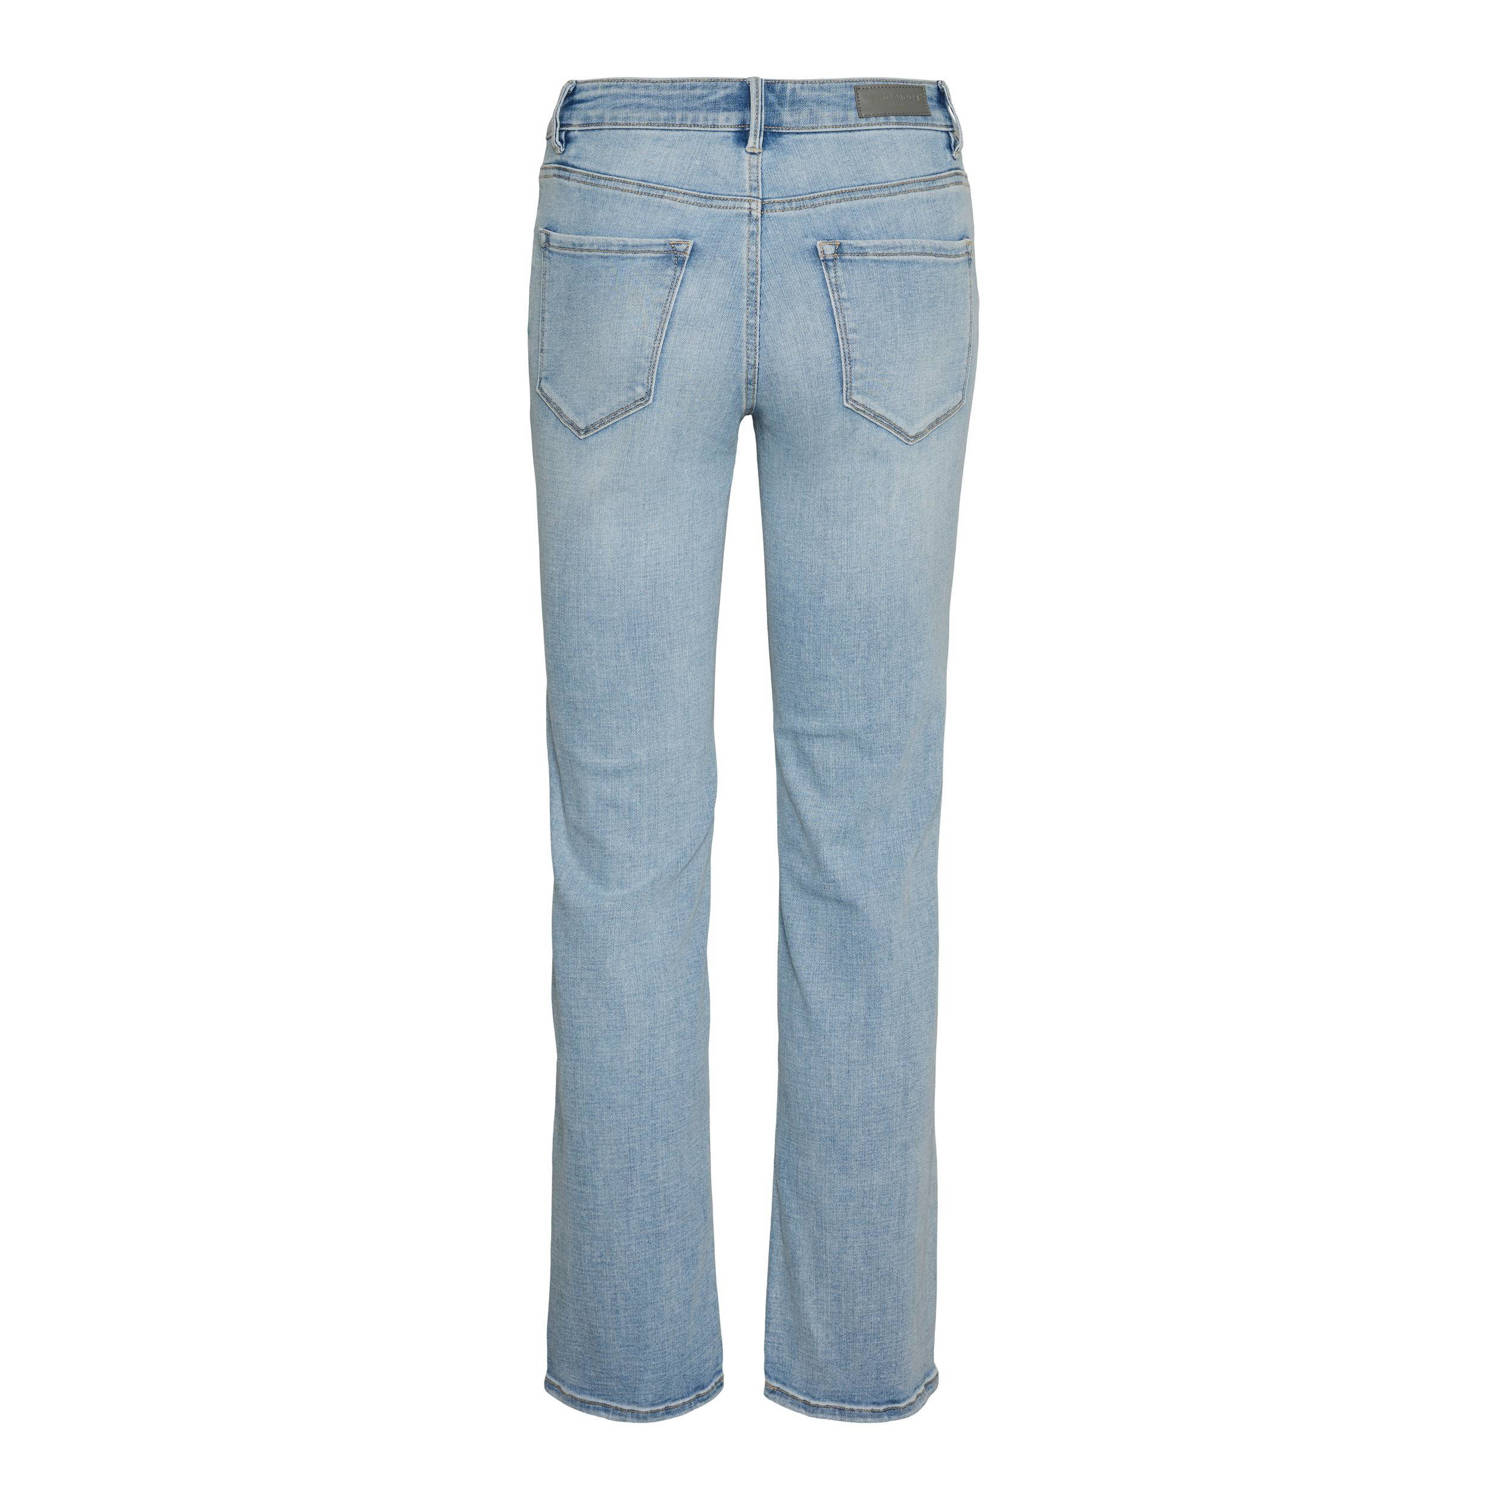 VERO MODA regular jeans VMFLASH light blue denim